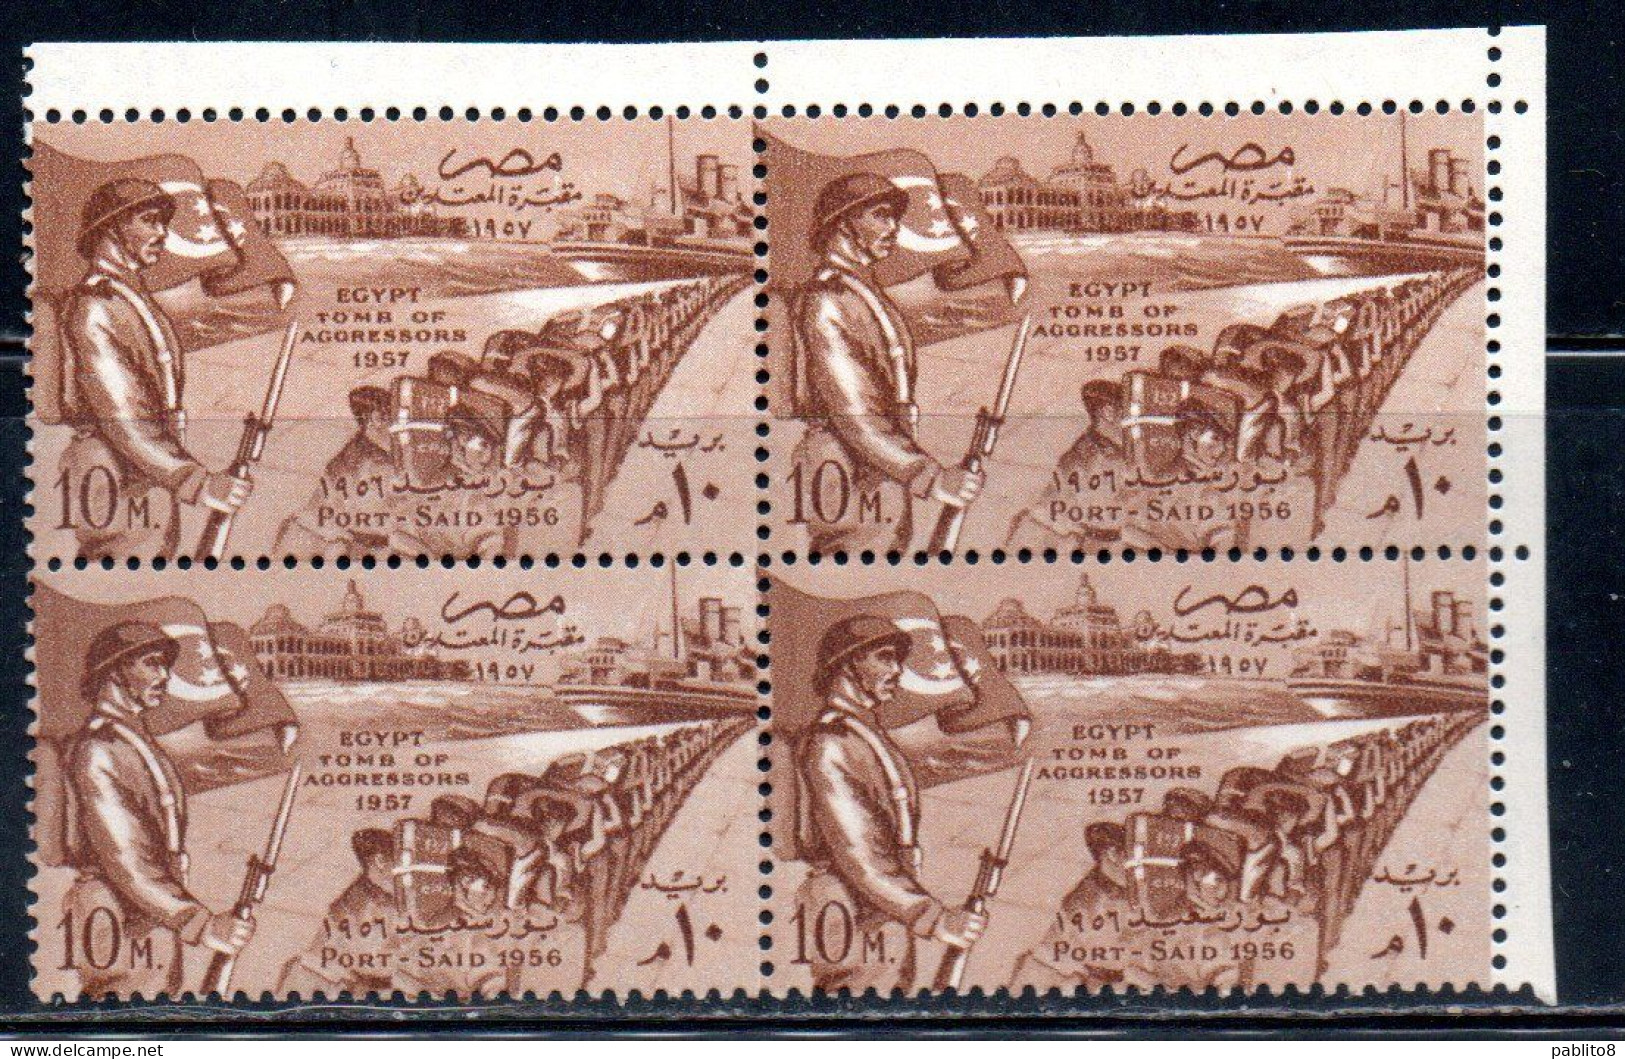 UAR EGYPT EGITTO 1957 TOMB OF AGGRESSORS 1957 PORT SAID 1956 10m MNH - Unused Stamps